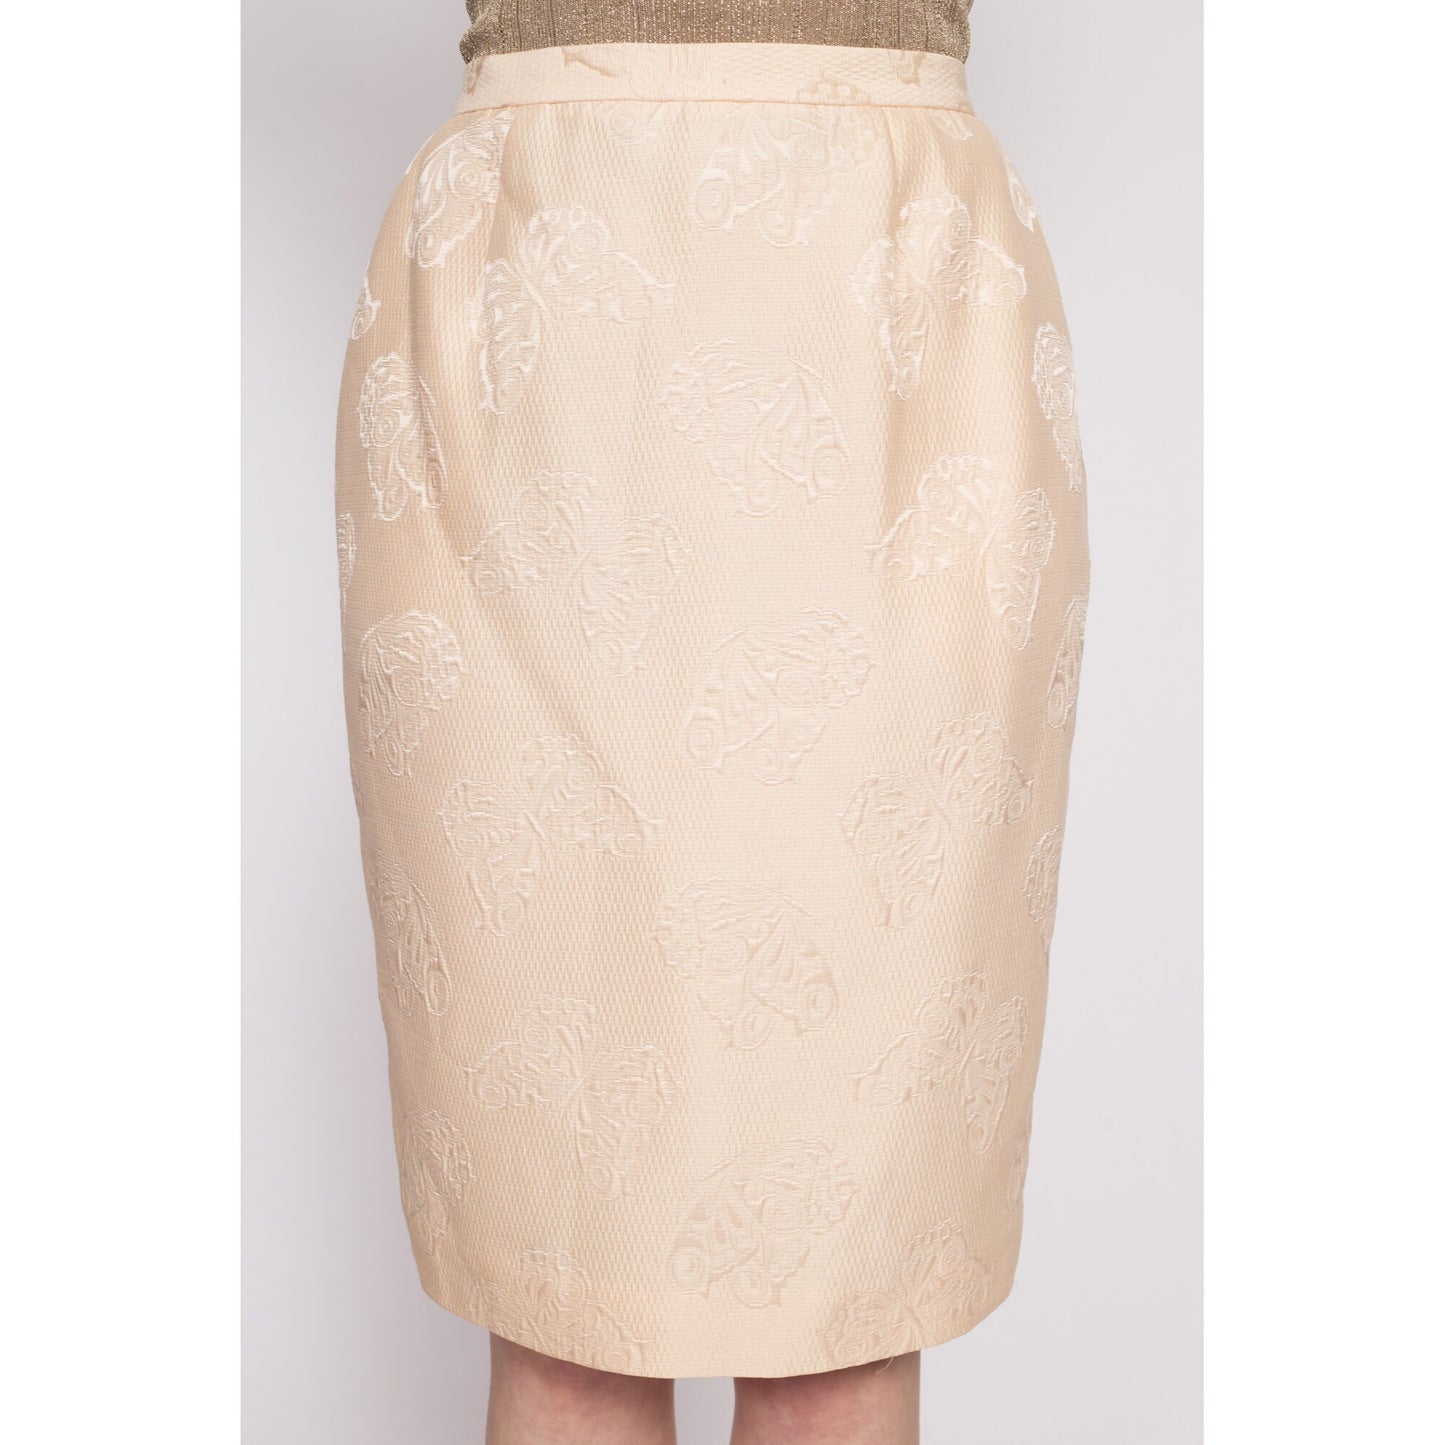 80s Christian Dior Butterfly Brocade Midi Skirt - Small to Medium, 27" | Vintage Boho Champagne High Waisted Designer Pencil Skirt